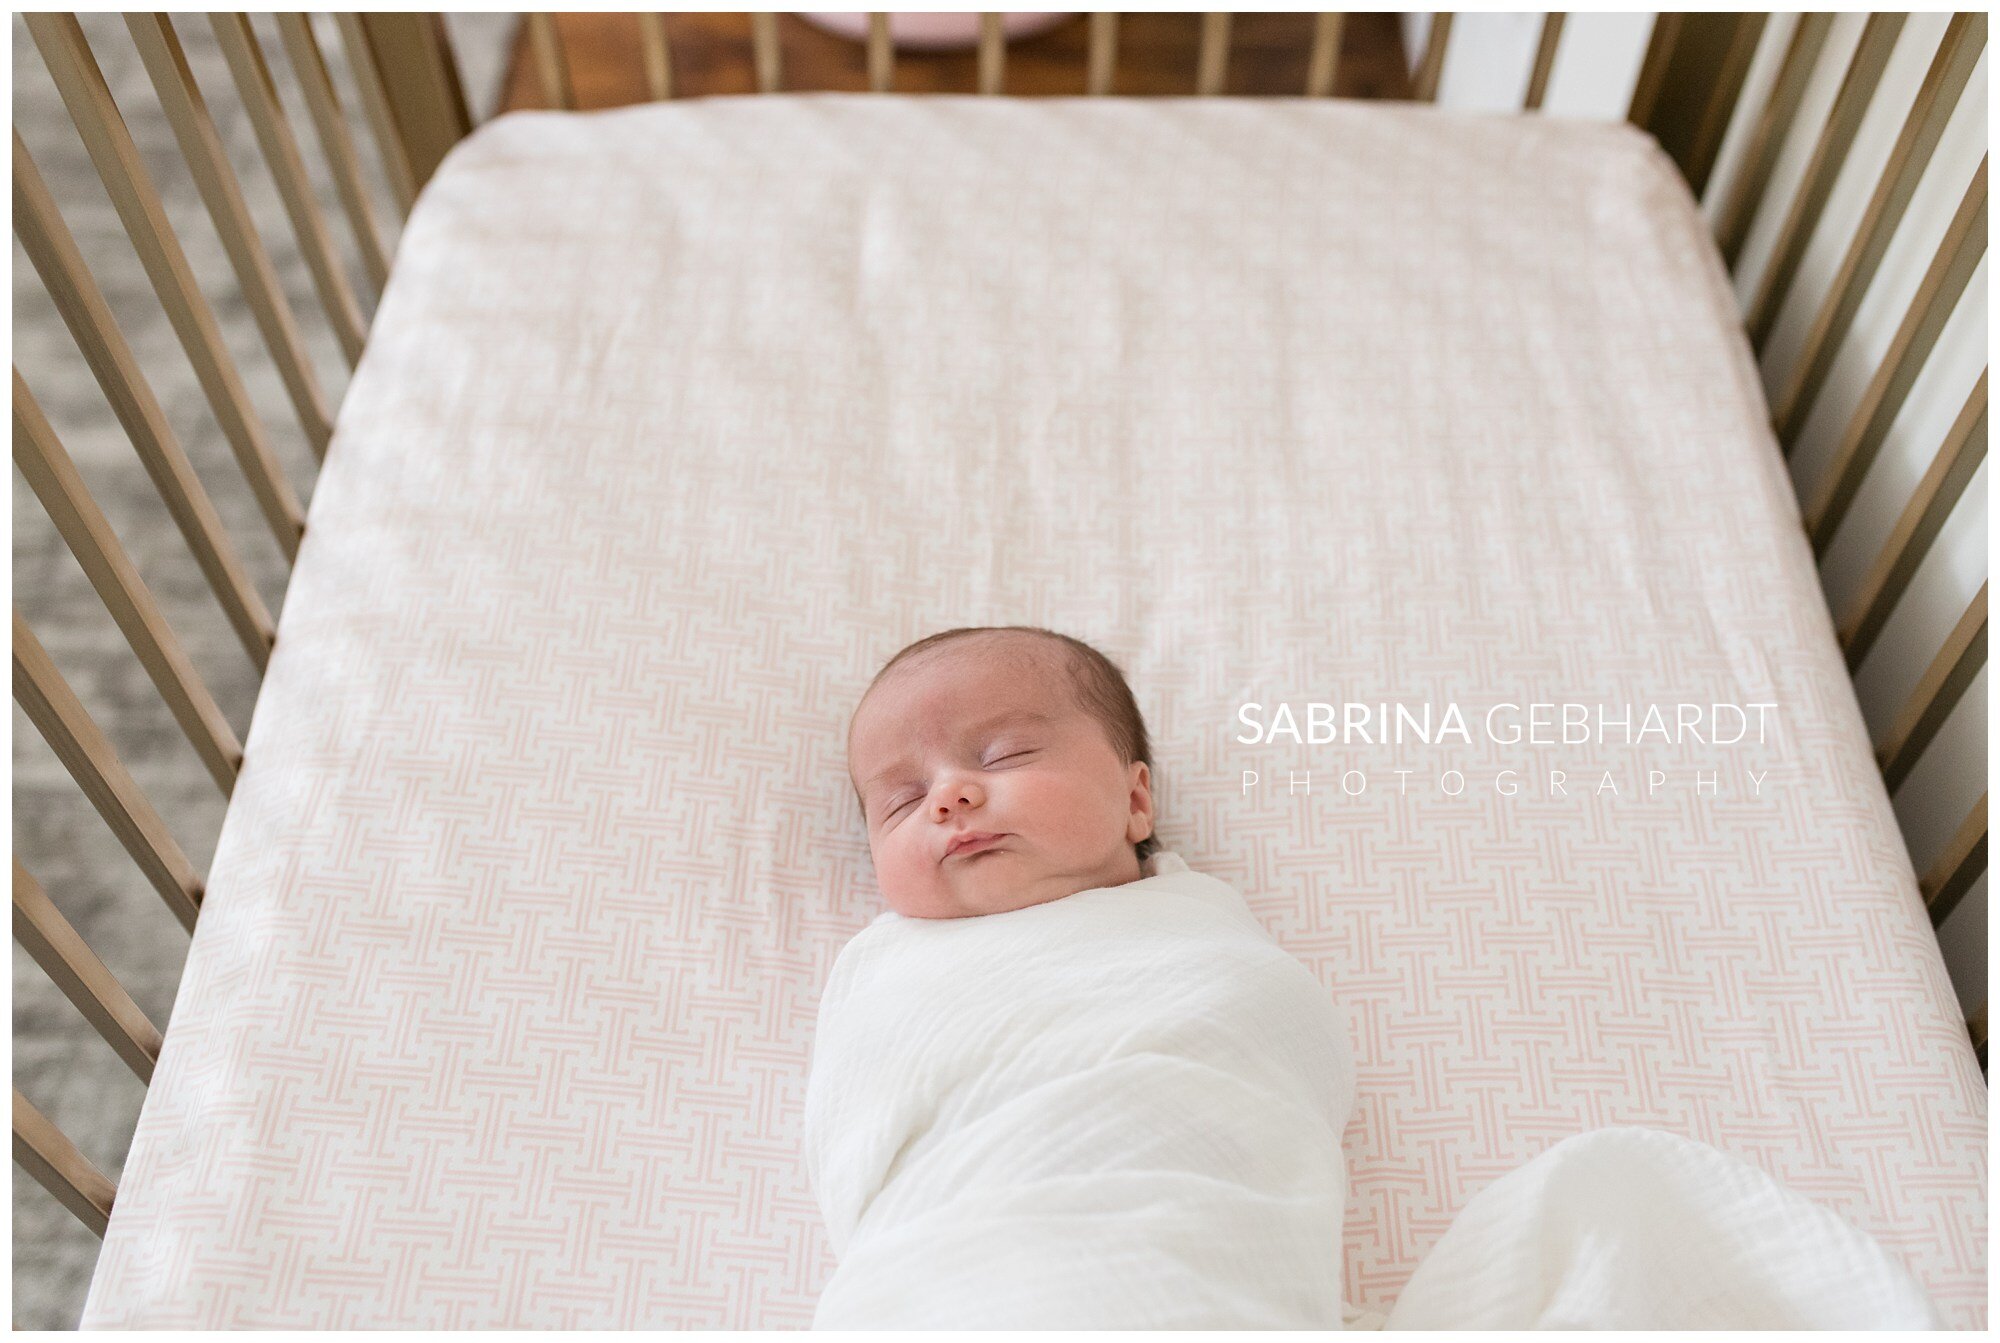 sabrina gebhardt fort worth texas lifestyle newborn photographer 0645